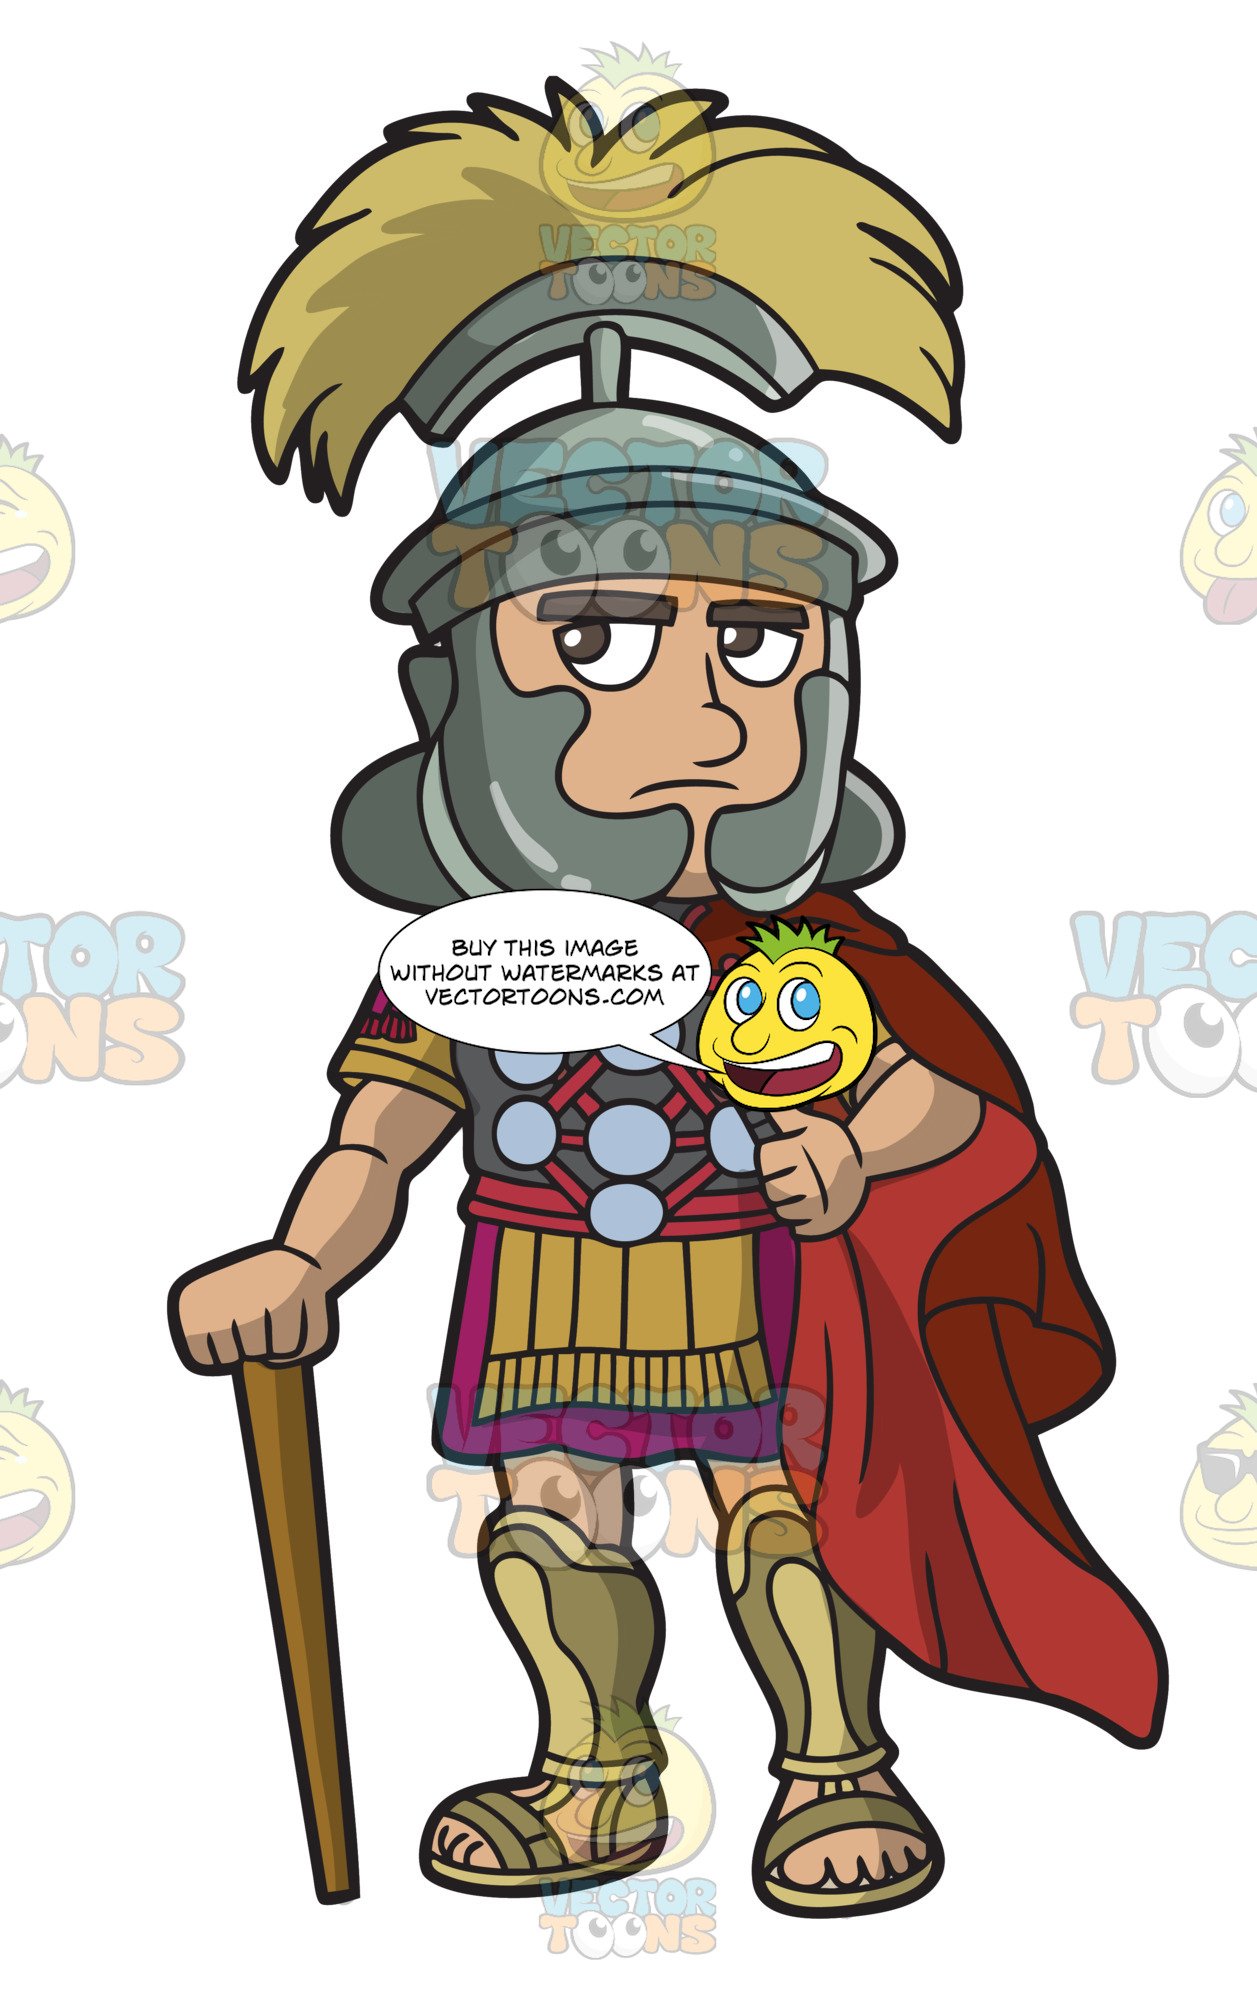 A Brave Roman Centurion Officer.